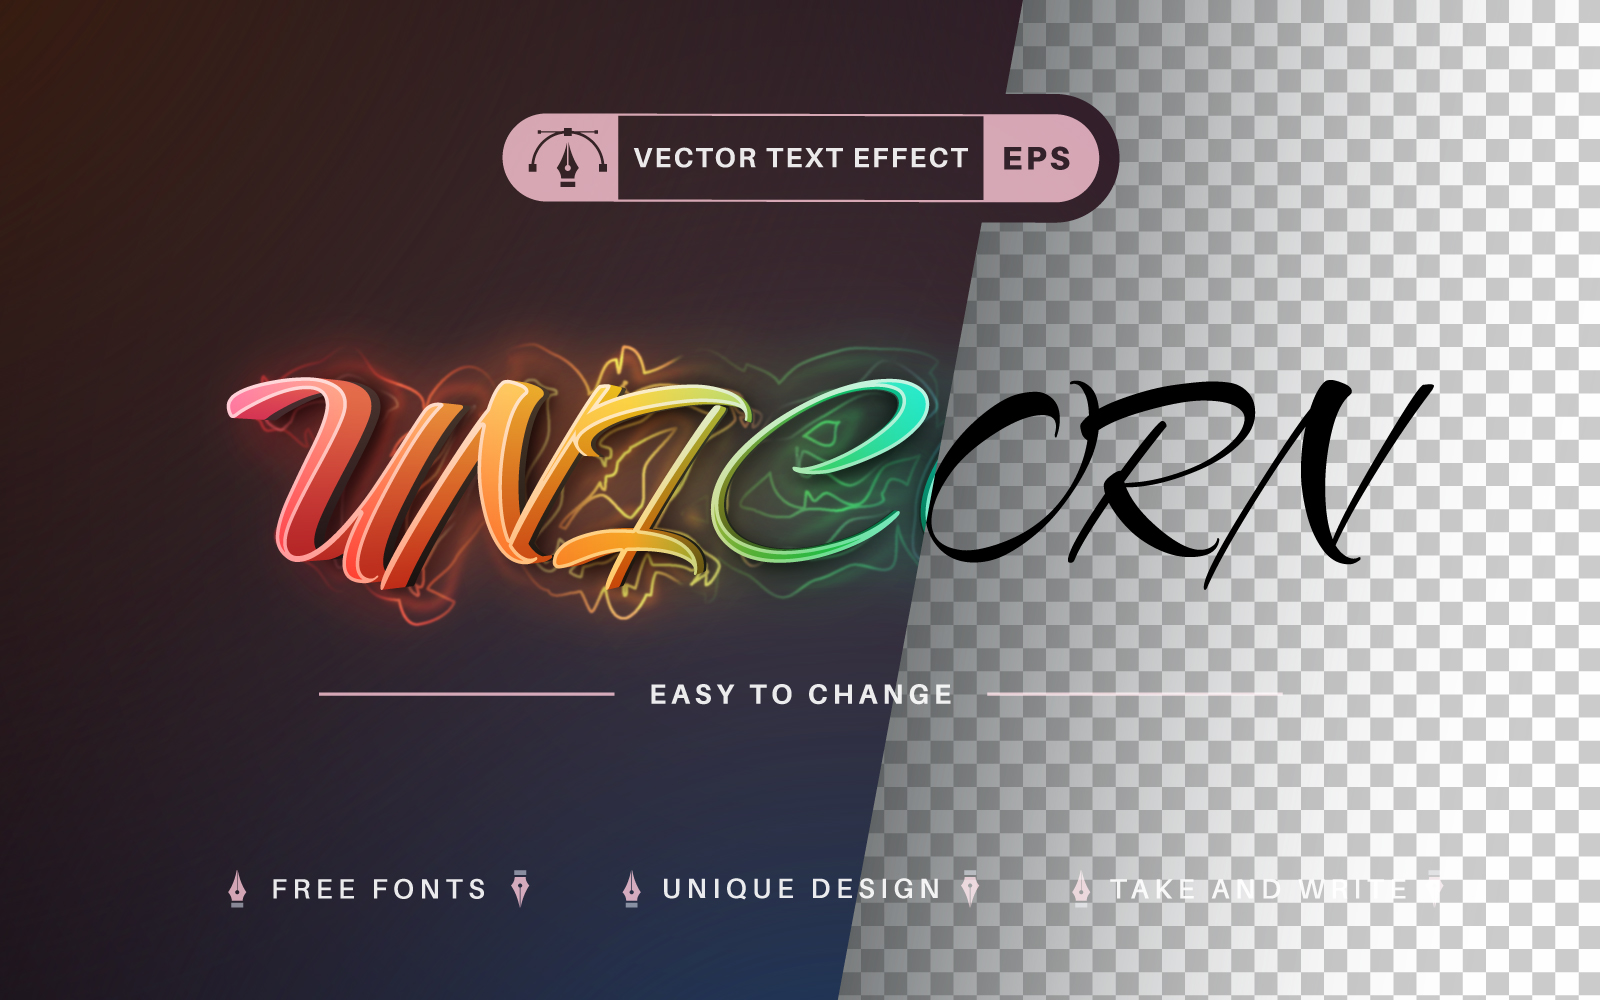 Unicorn Glow - Editable Text Effect, Font Style